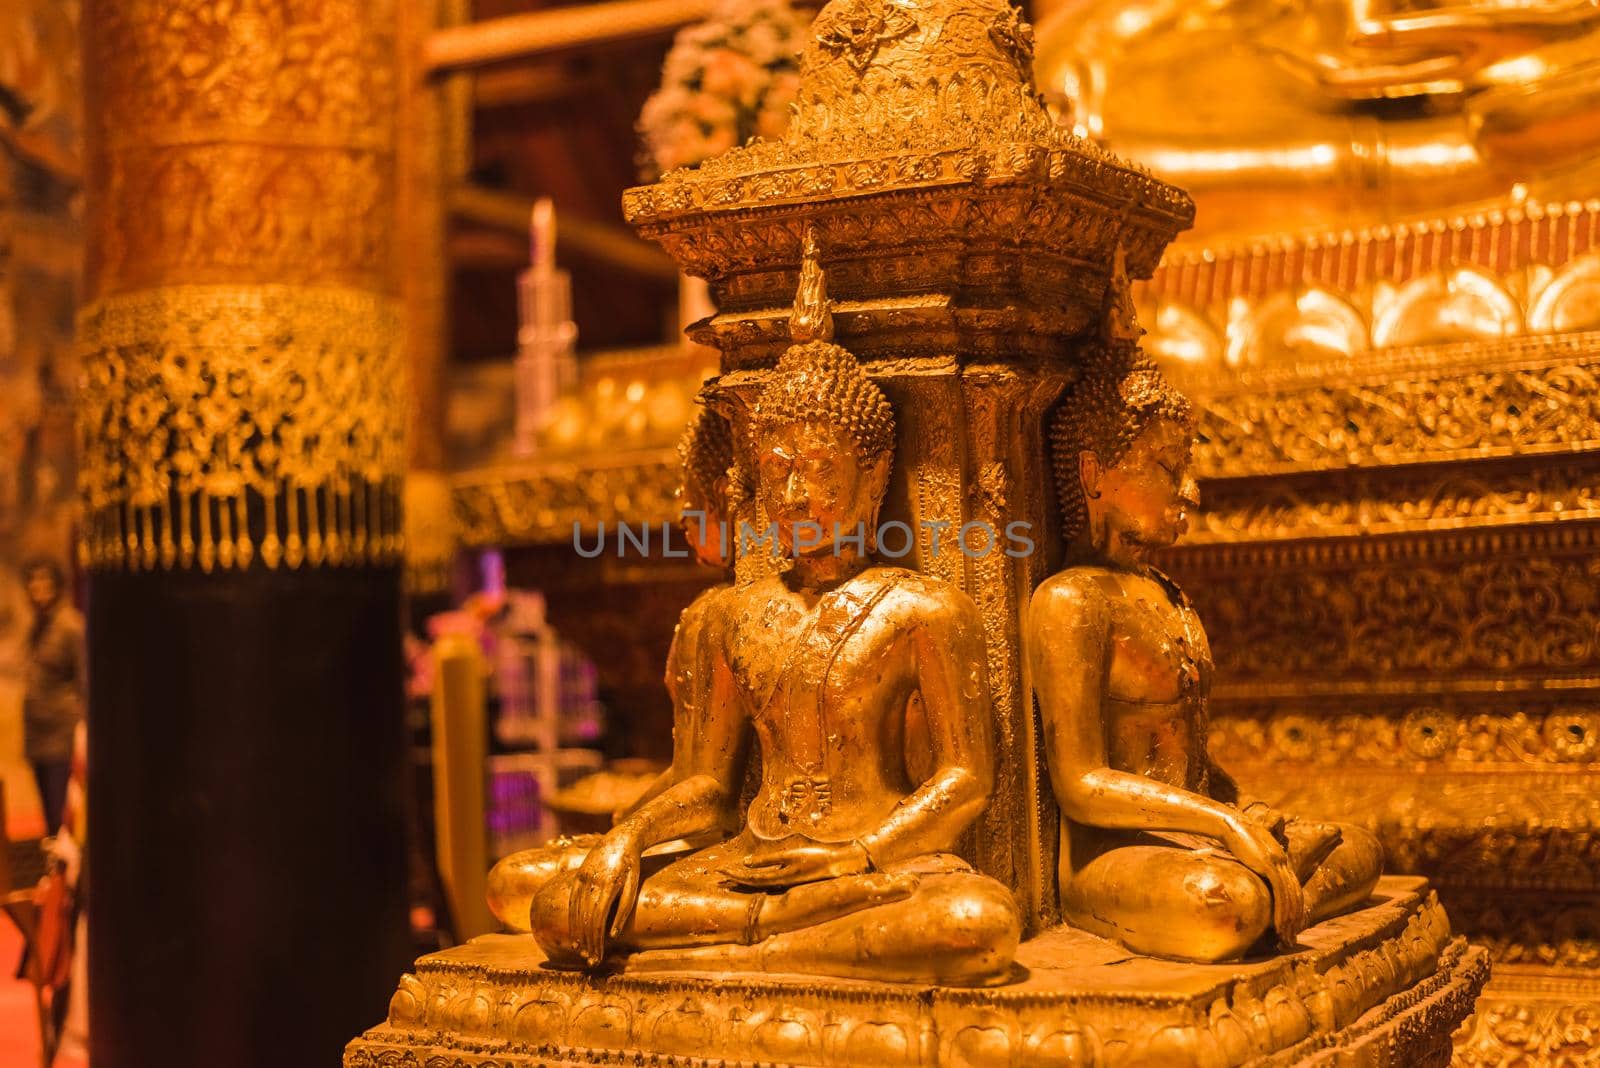 Golden buddha image in Wat Phumin in Nan, Thailand by Wmpix